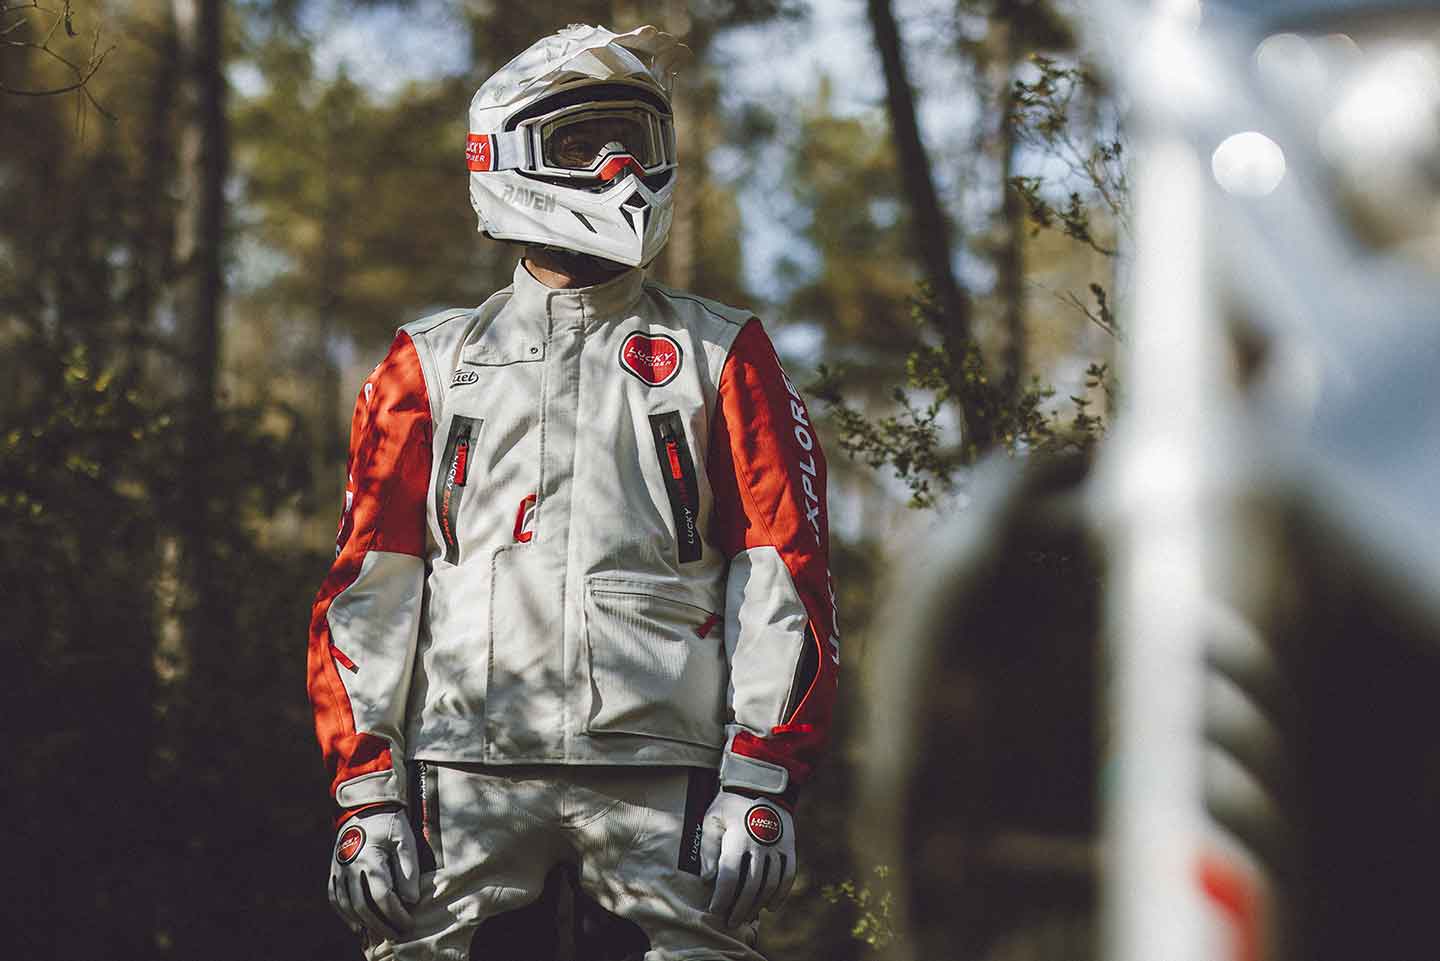 New Lucky Explorer Endurage Fuel Motorcycles enduro jacket.